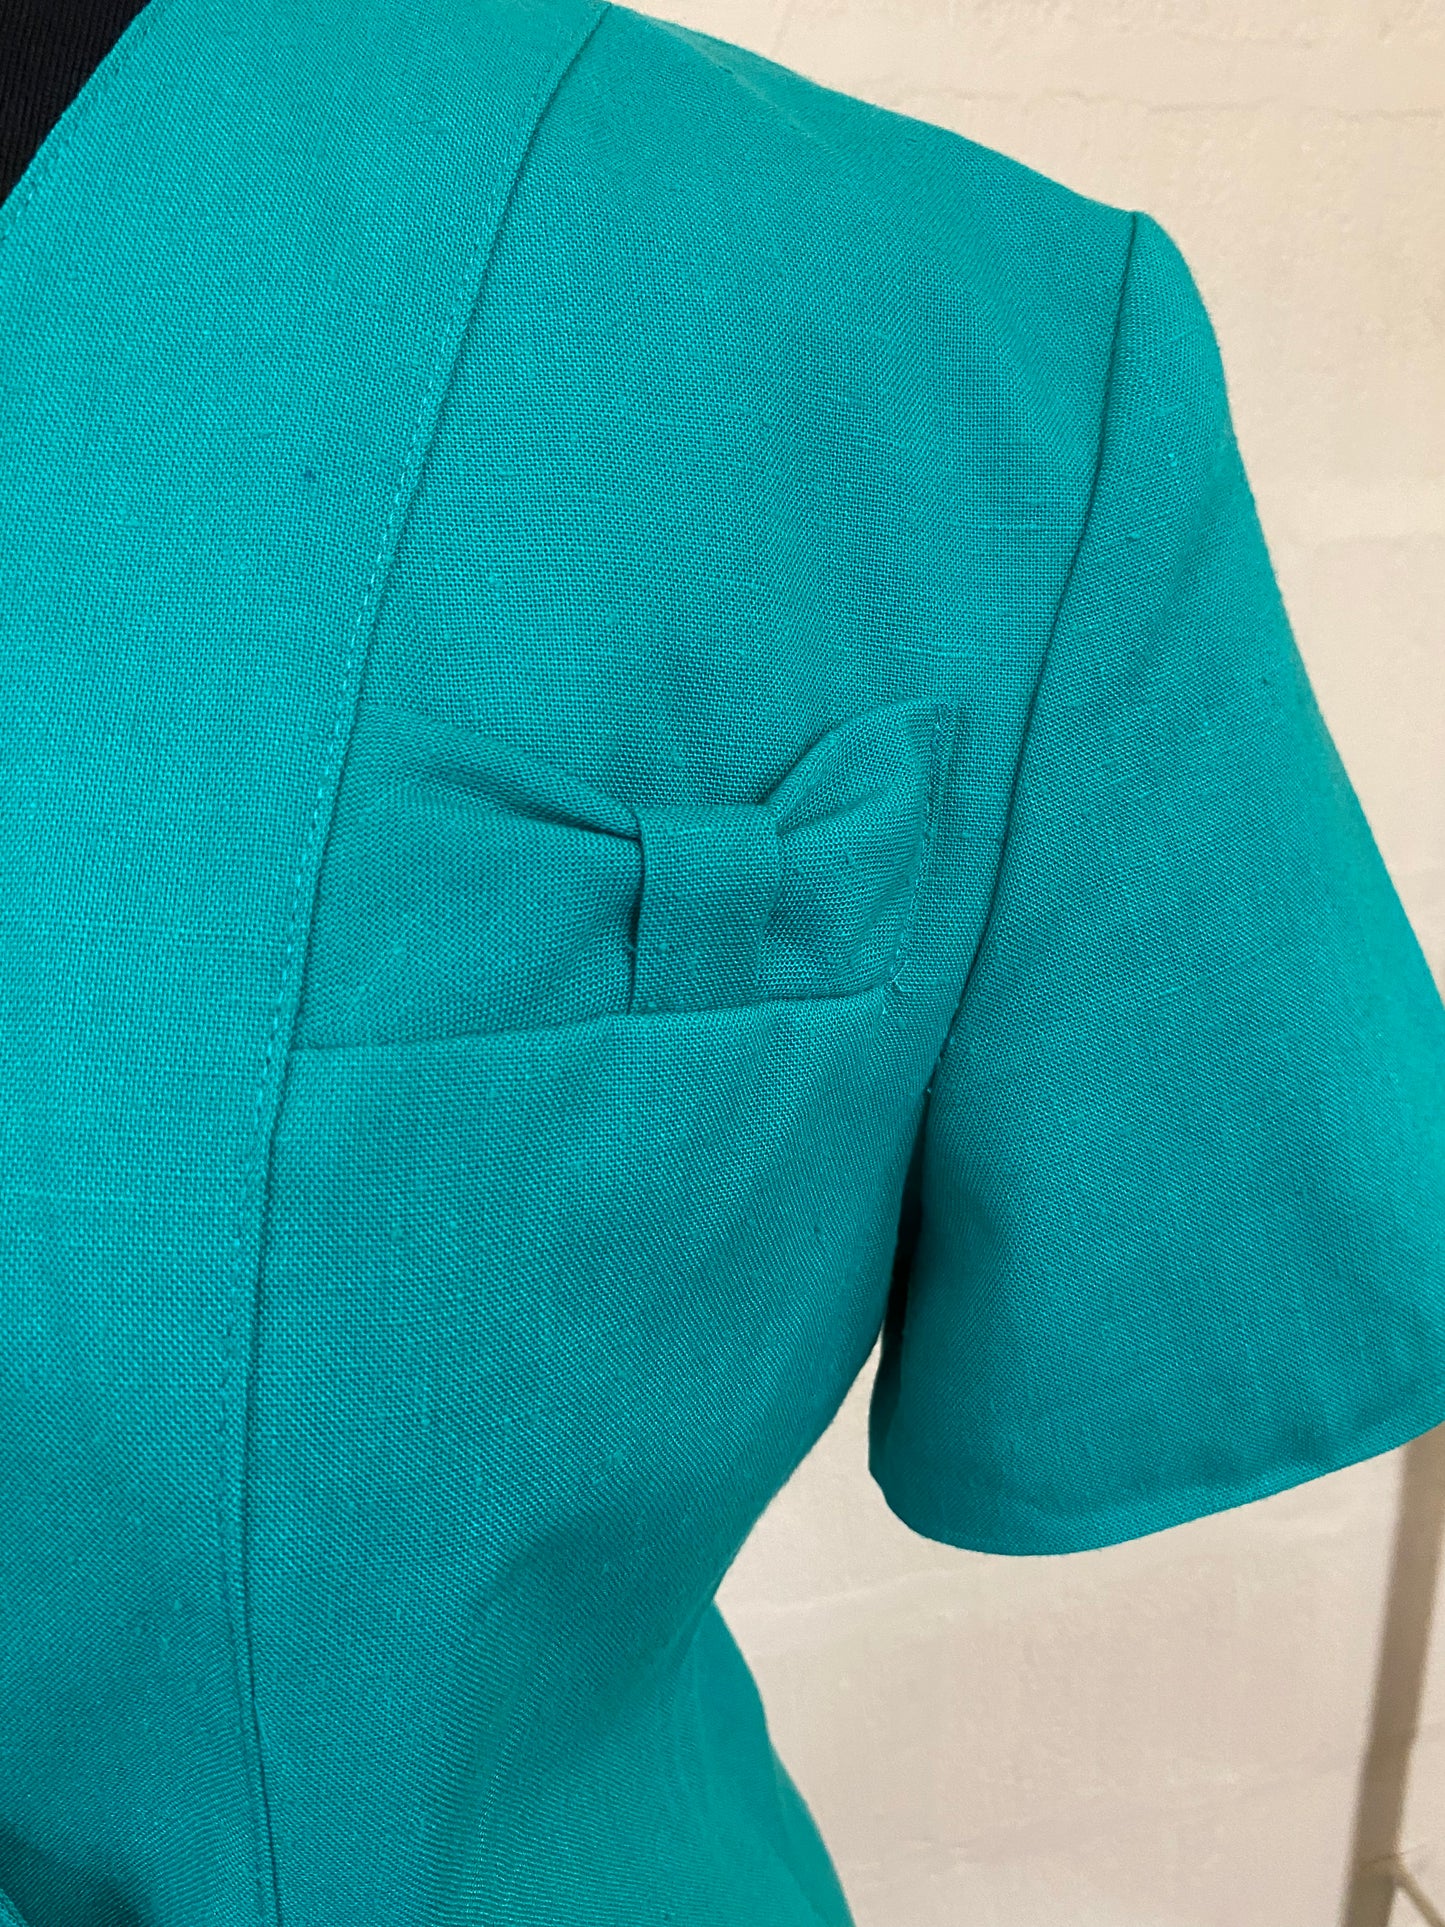 1990s Turquoise Green Jacket Size 10